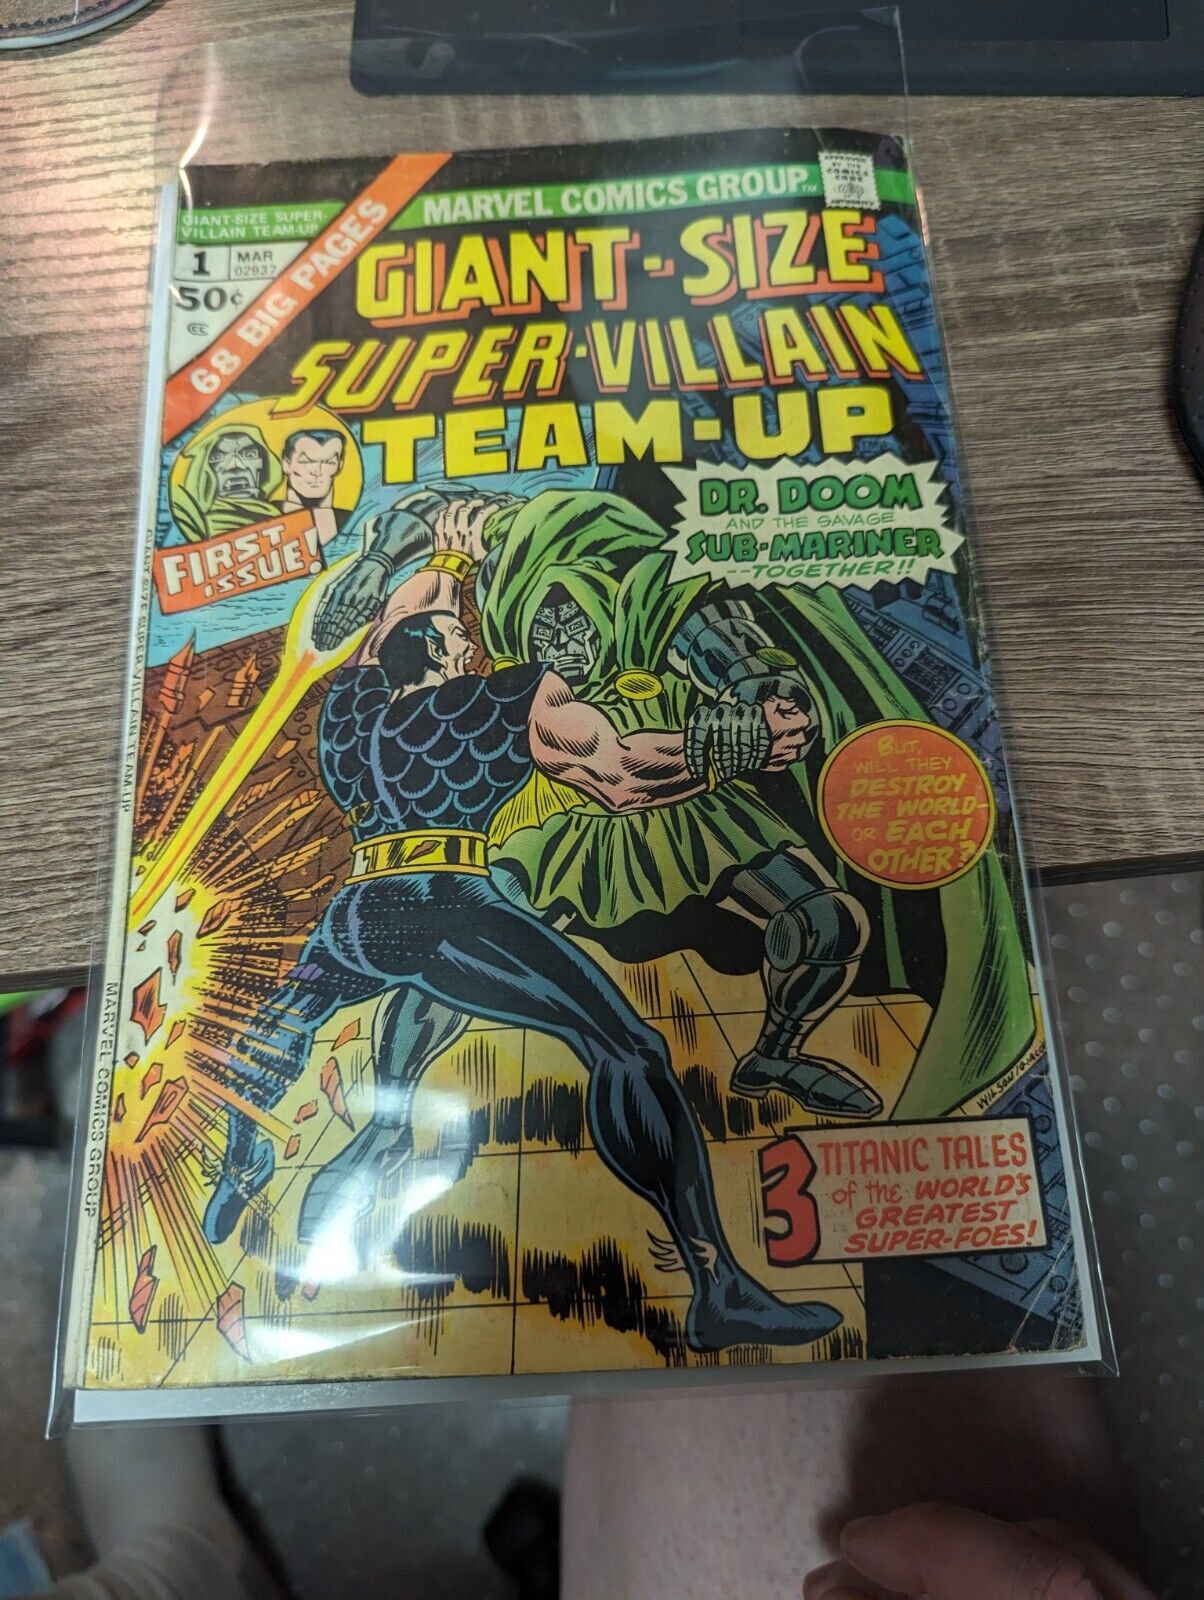 Giant-Size Super-Villain Team-Up #1 (Mar 1975, Marvel)